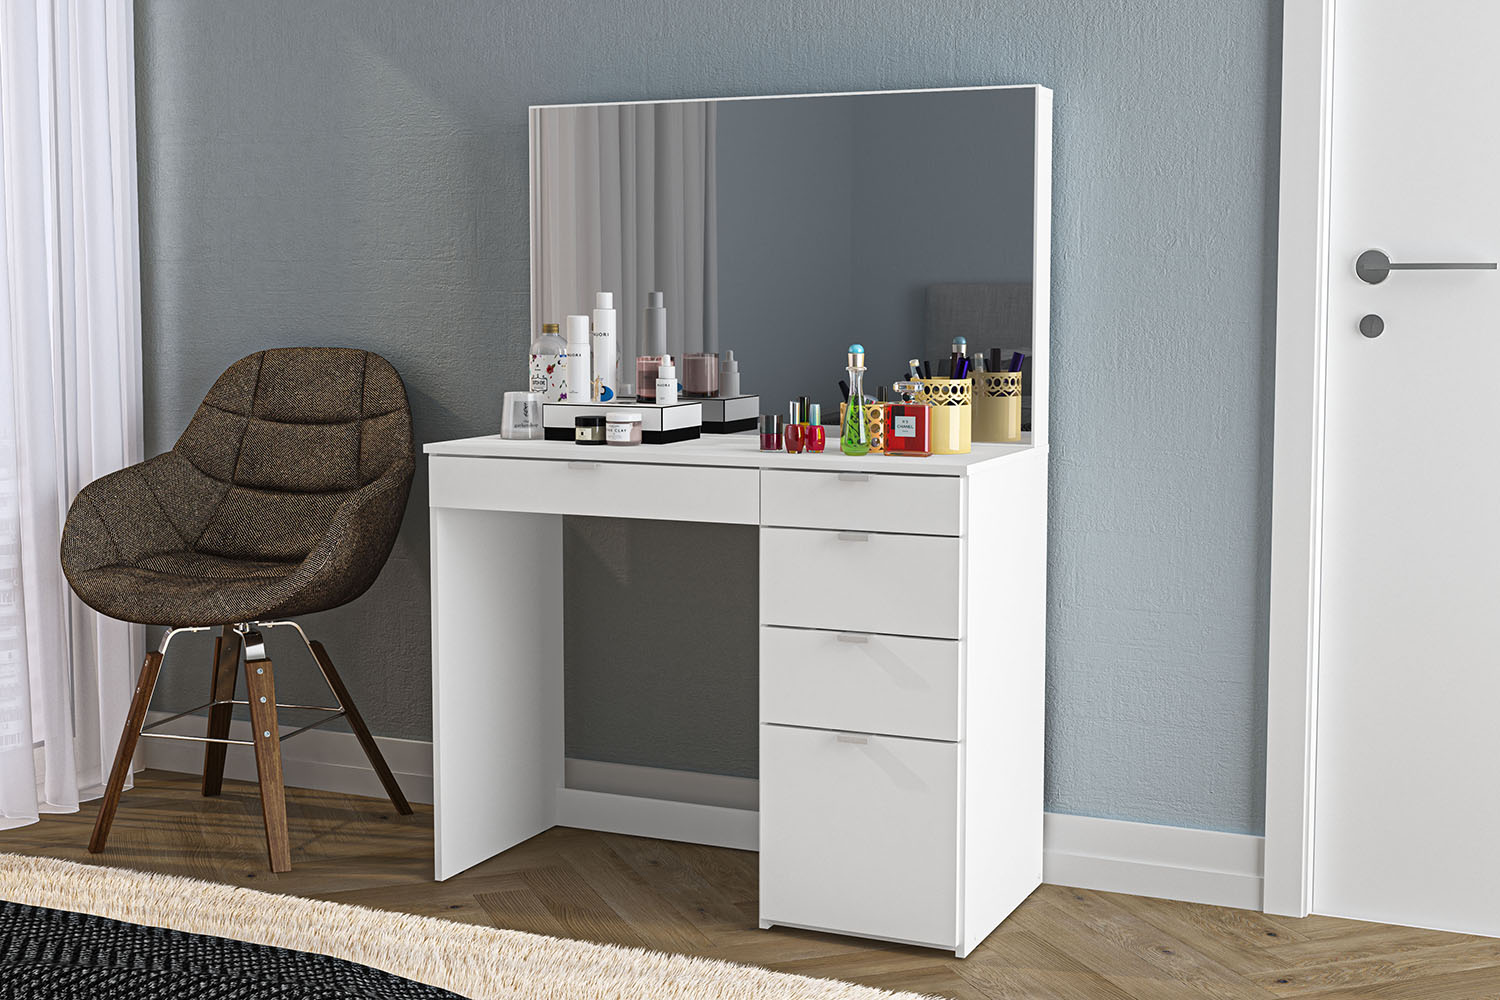 Polifurniture Linden Modern Bedroom Makeup Vanity Table, White Finish - image 1 of 14